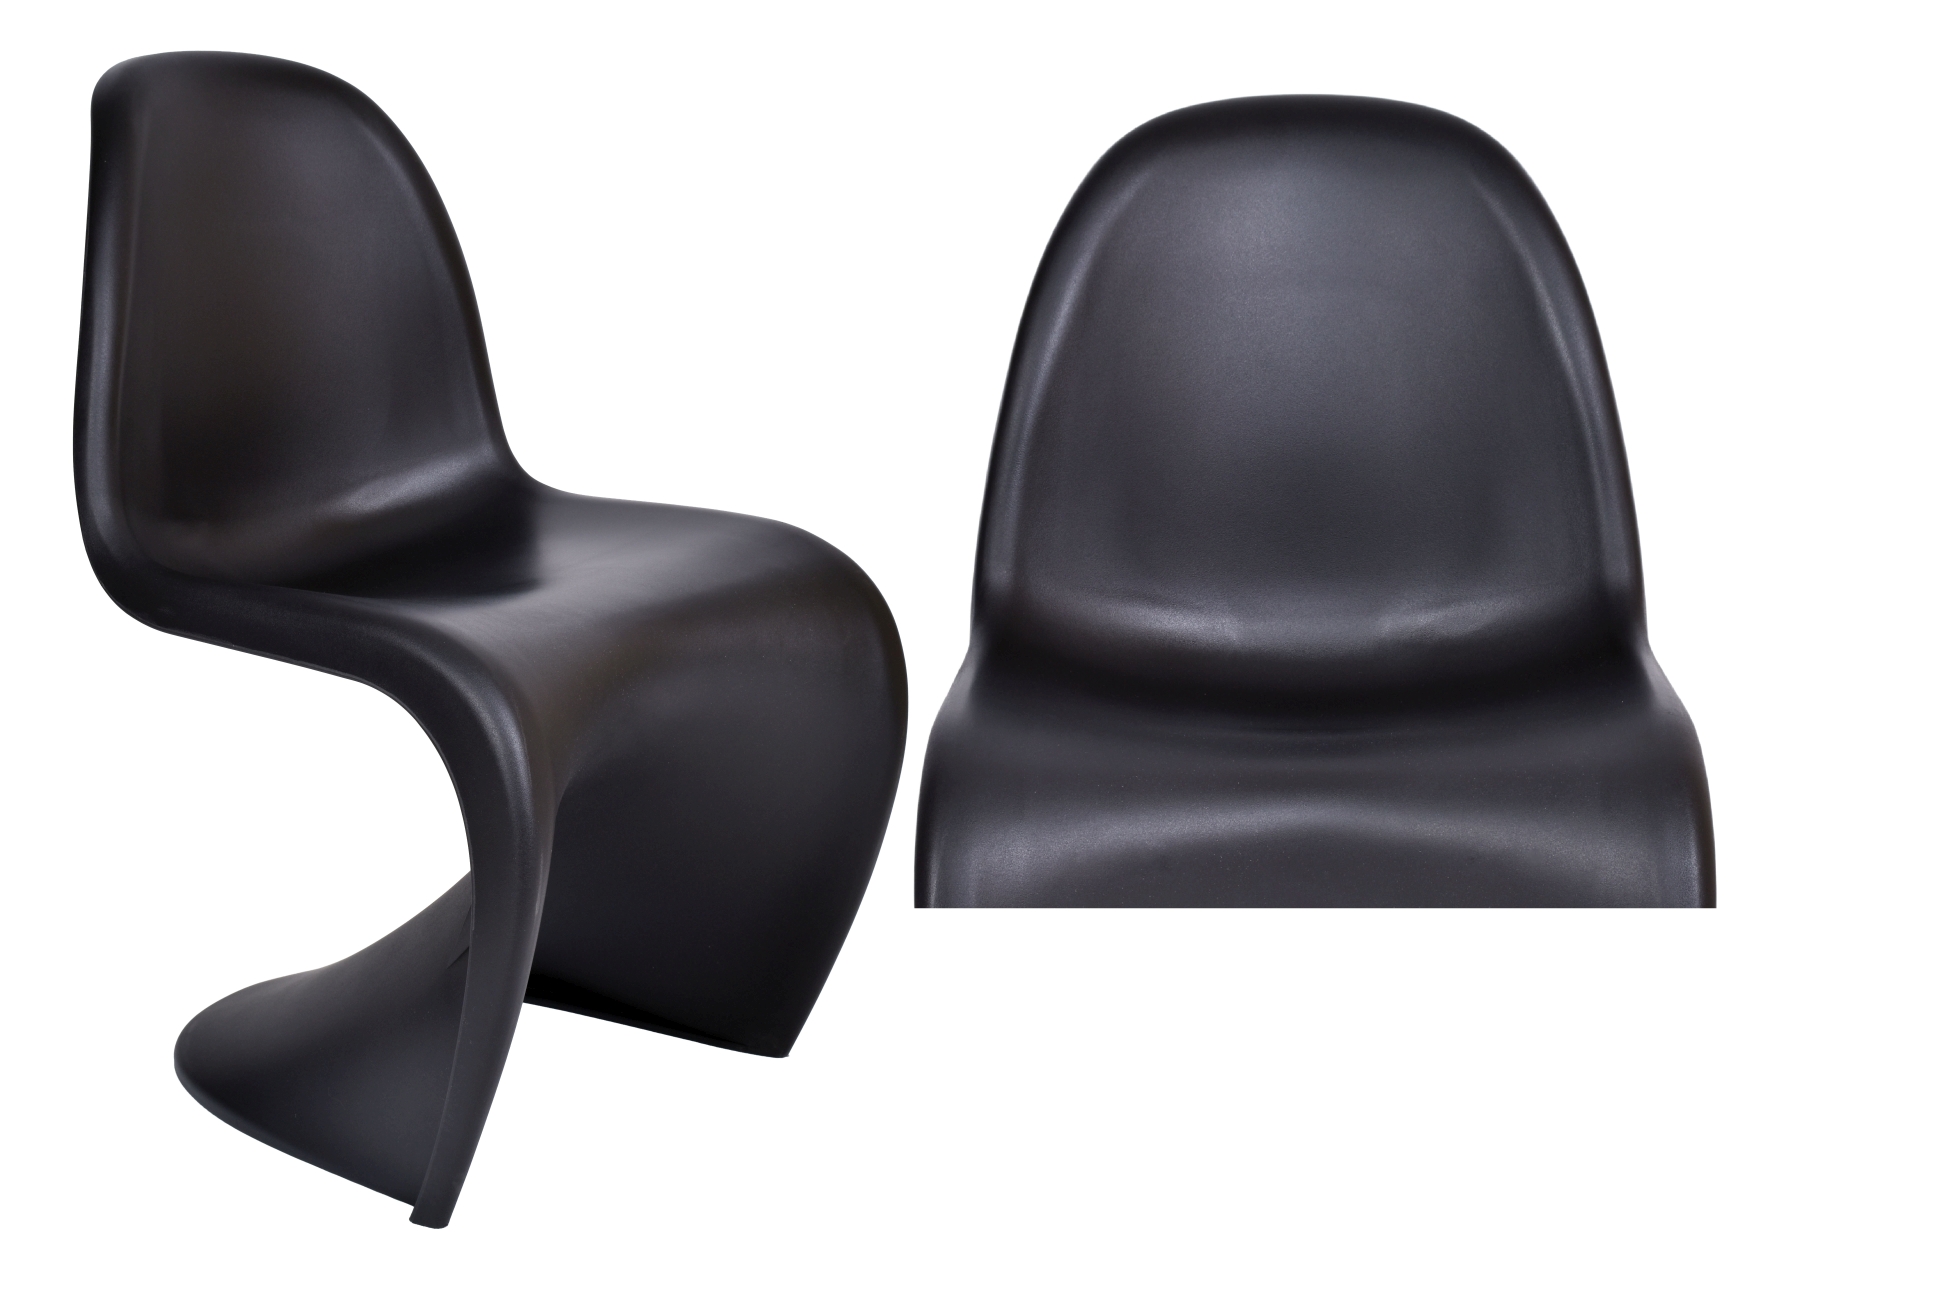 krzeslo nowoczesne daphne panton